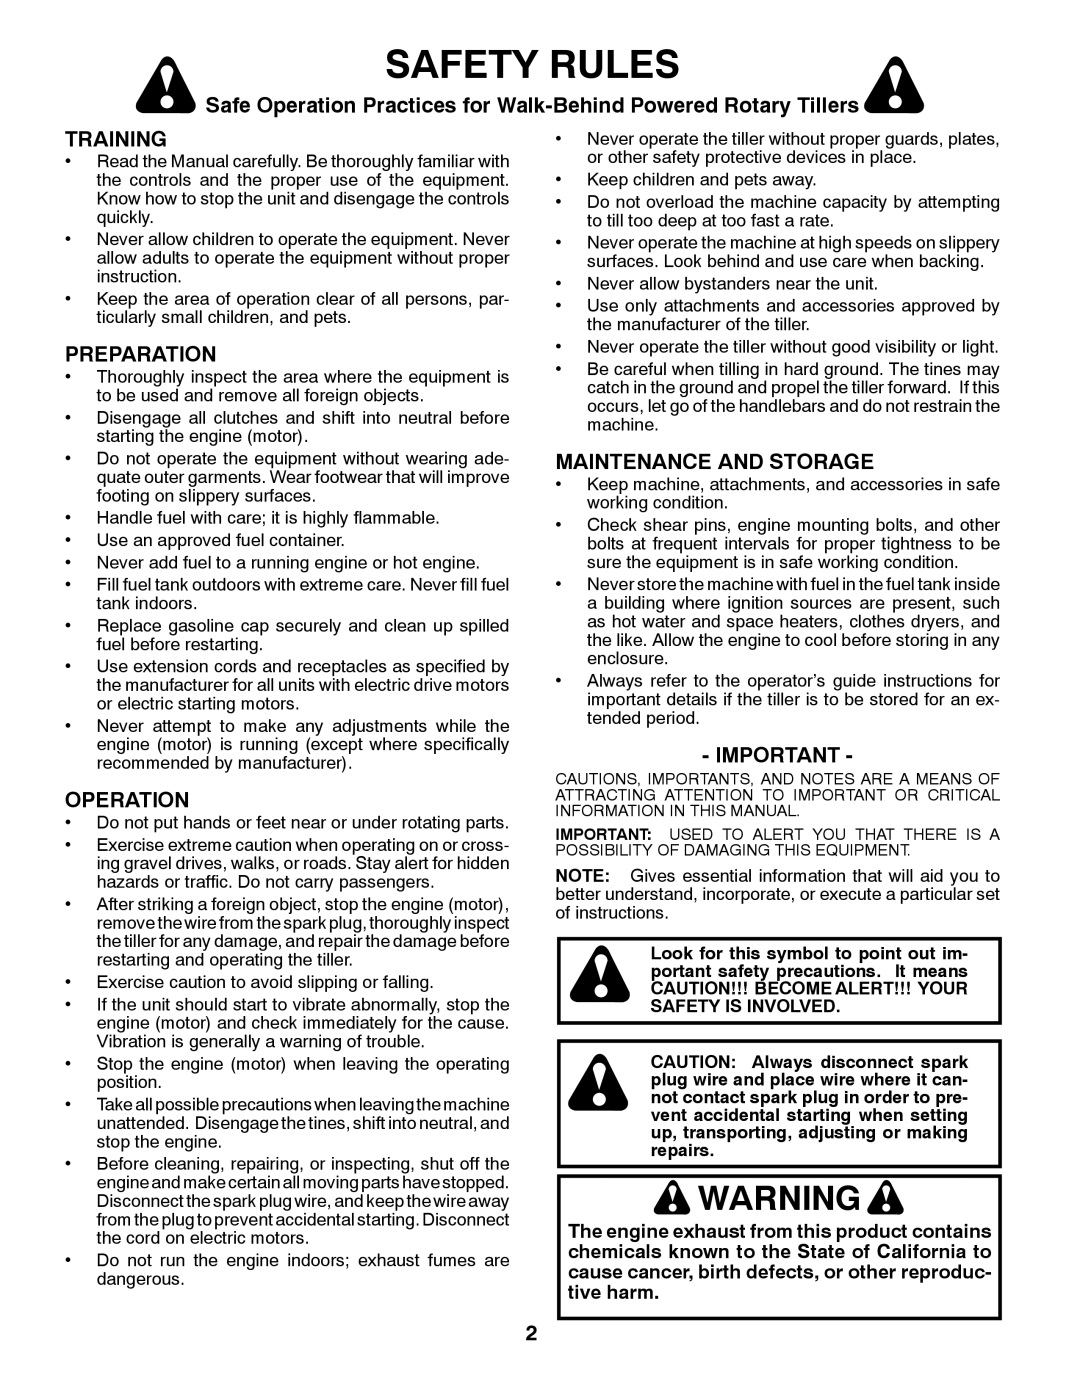 Husqvarna RTT900 owner manual Safety Rules, Training, Preparation, Operation, Maintenance And Storage 